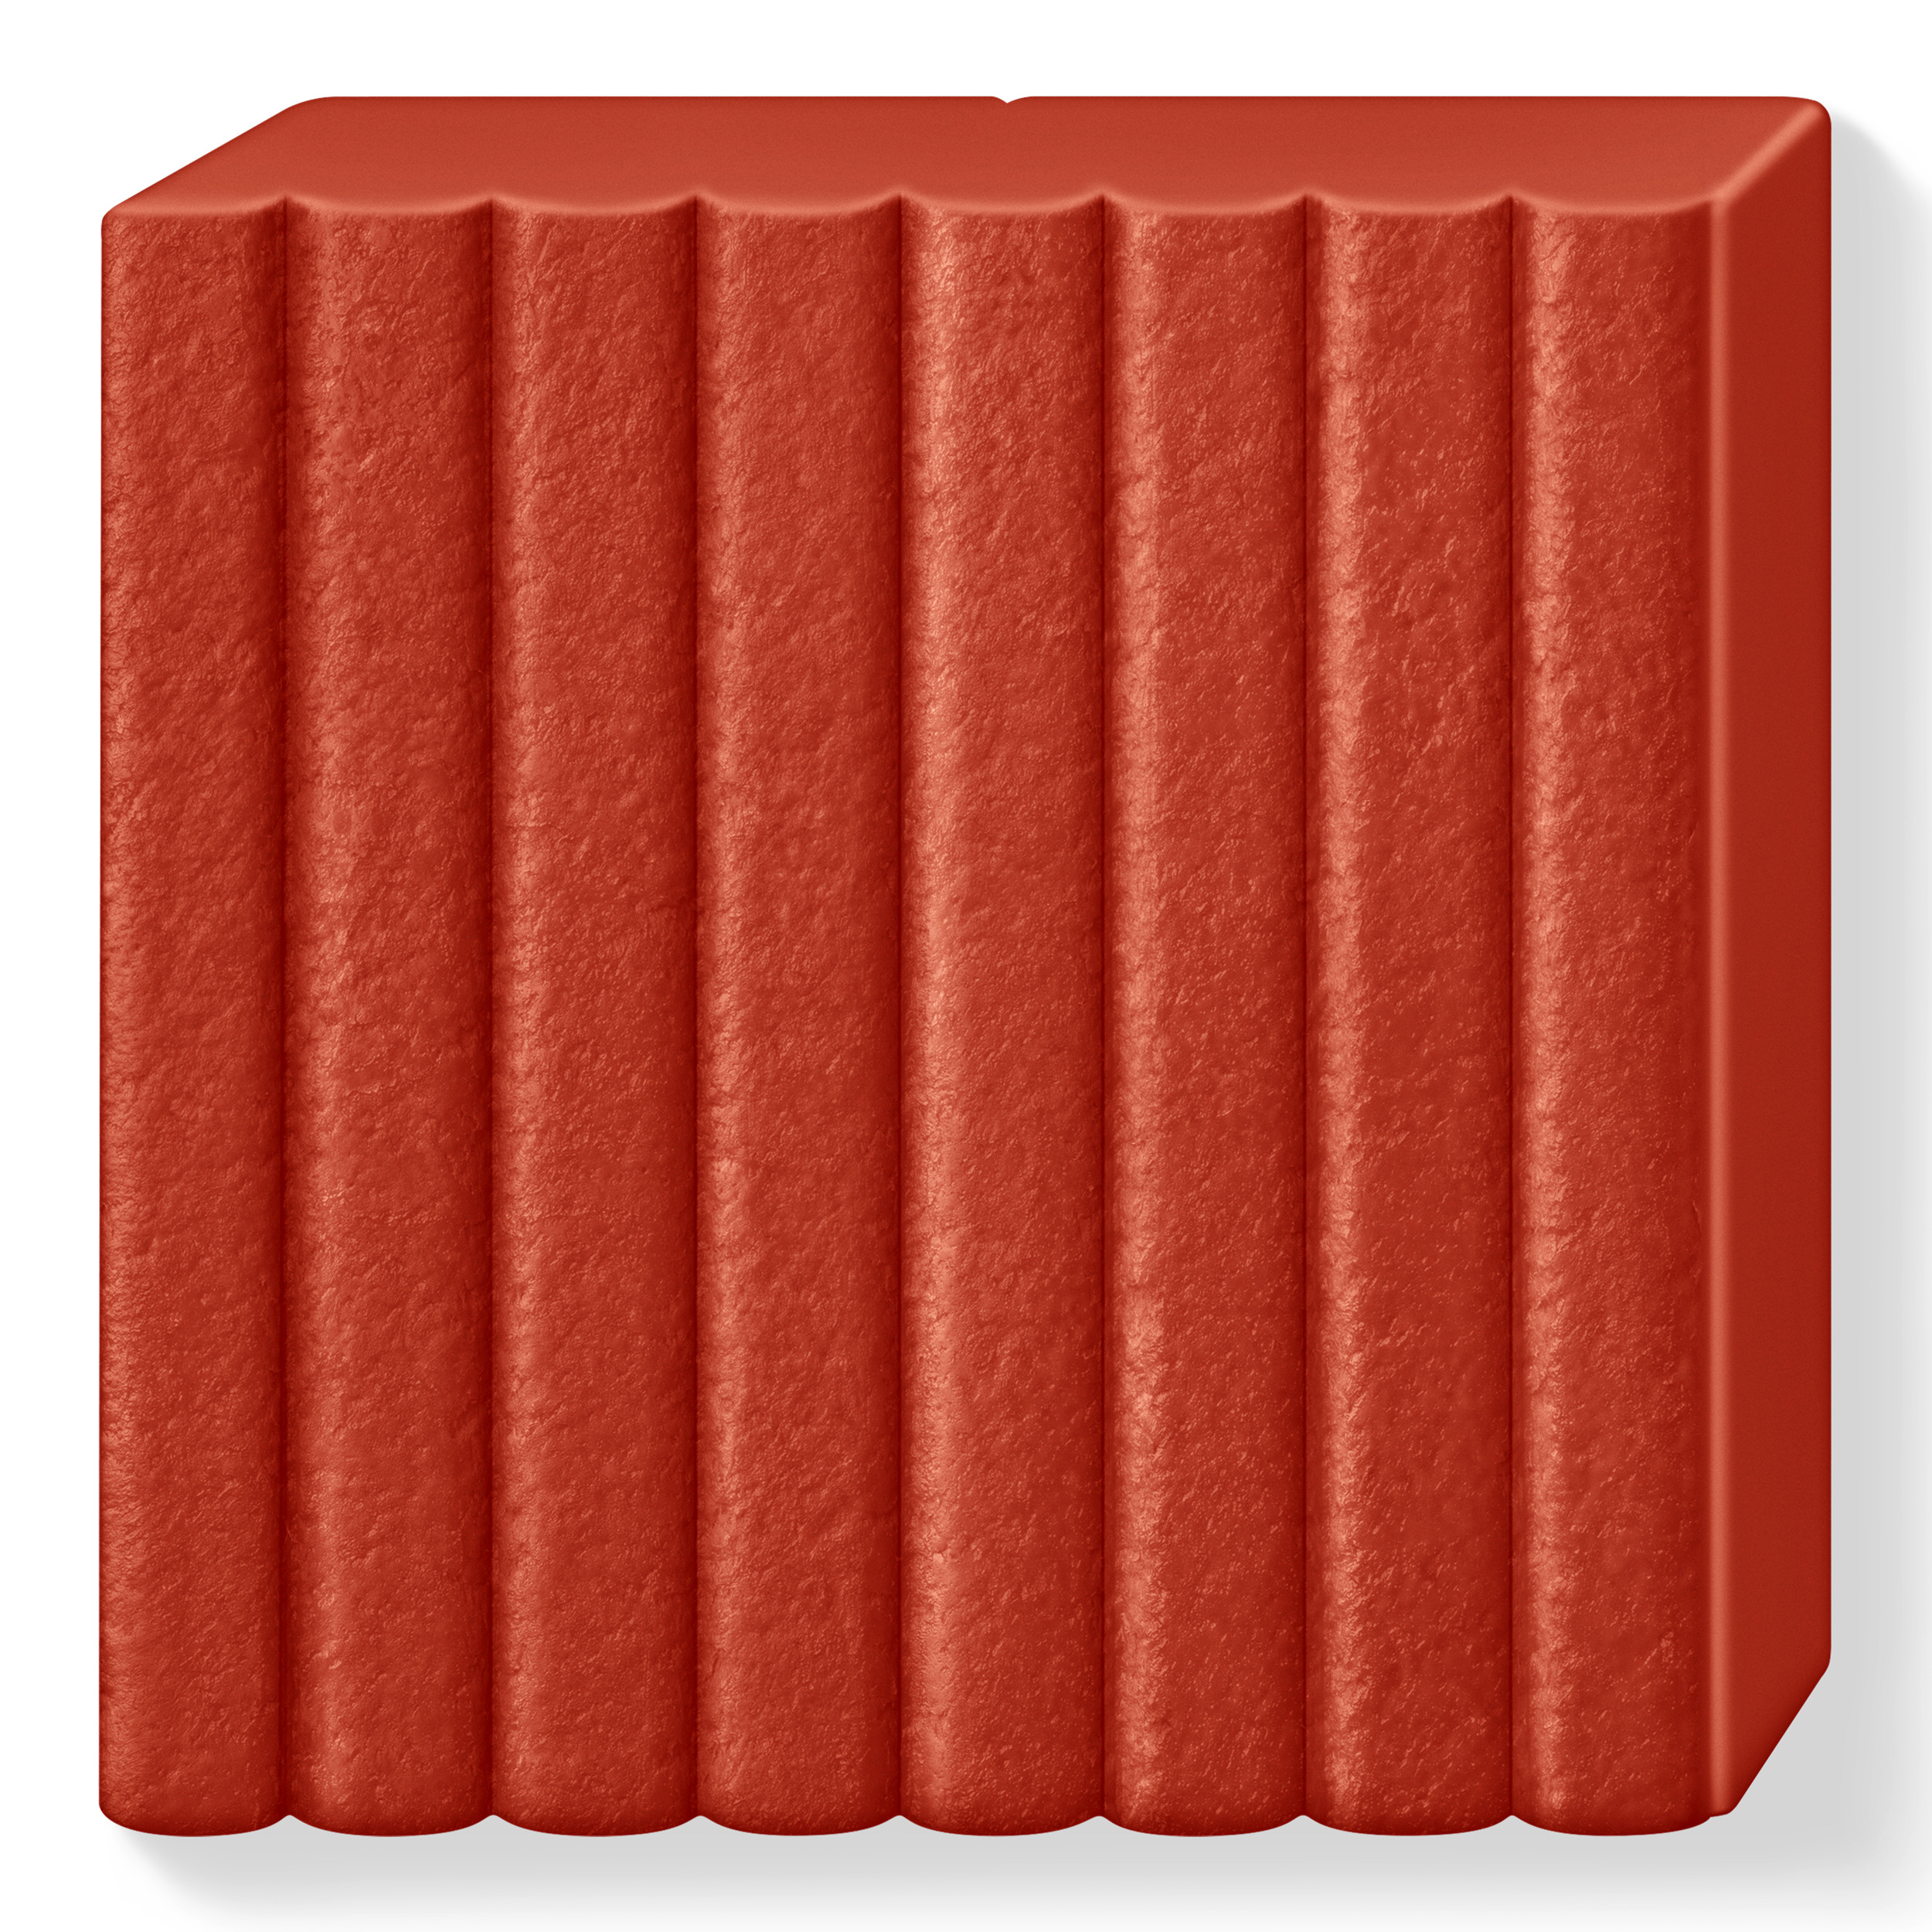 8010 749 FIMO Leather "Rust" ler clay lædereffekt rustrød bordeaux læder